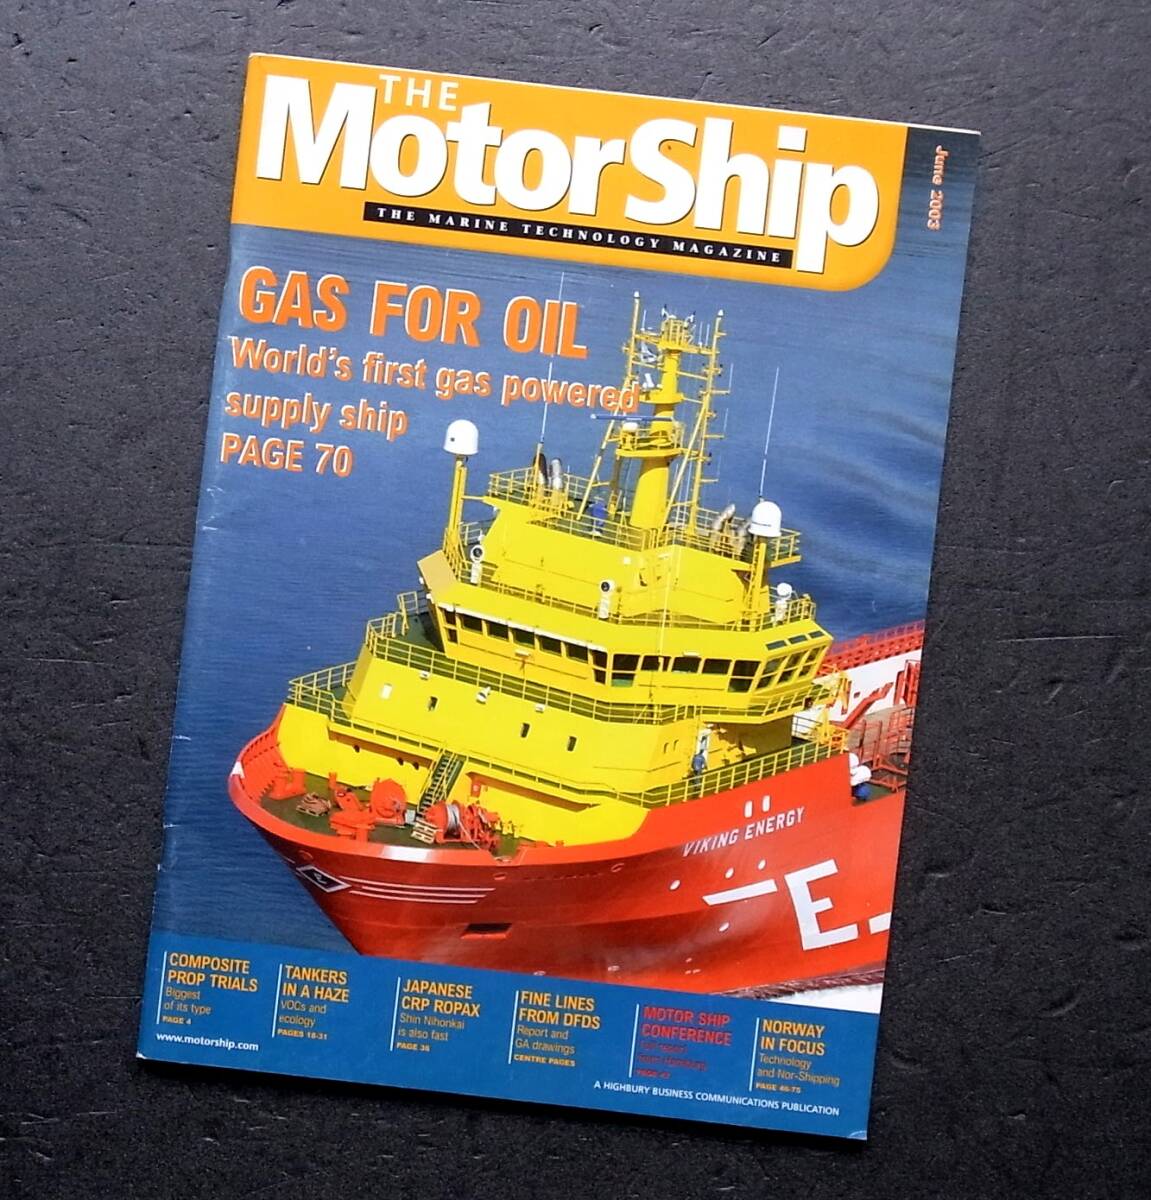  Британия судно технология журнал The MotorShip 995 номер 